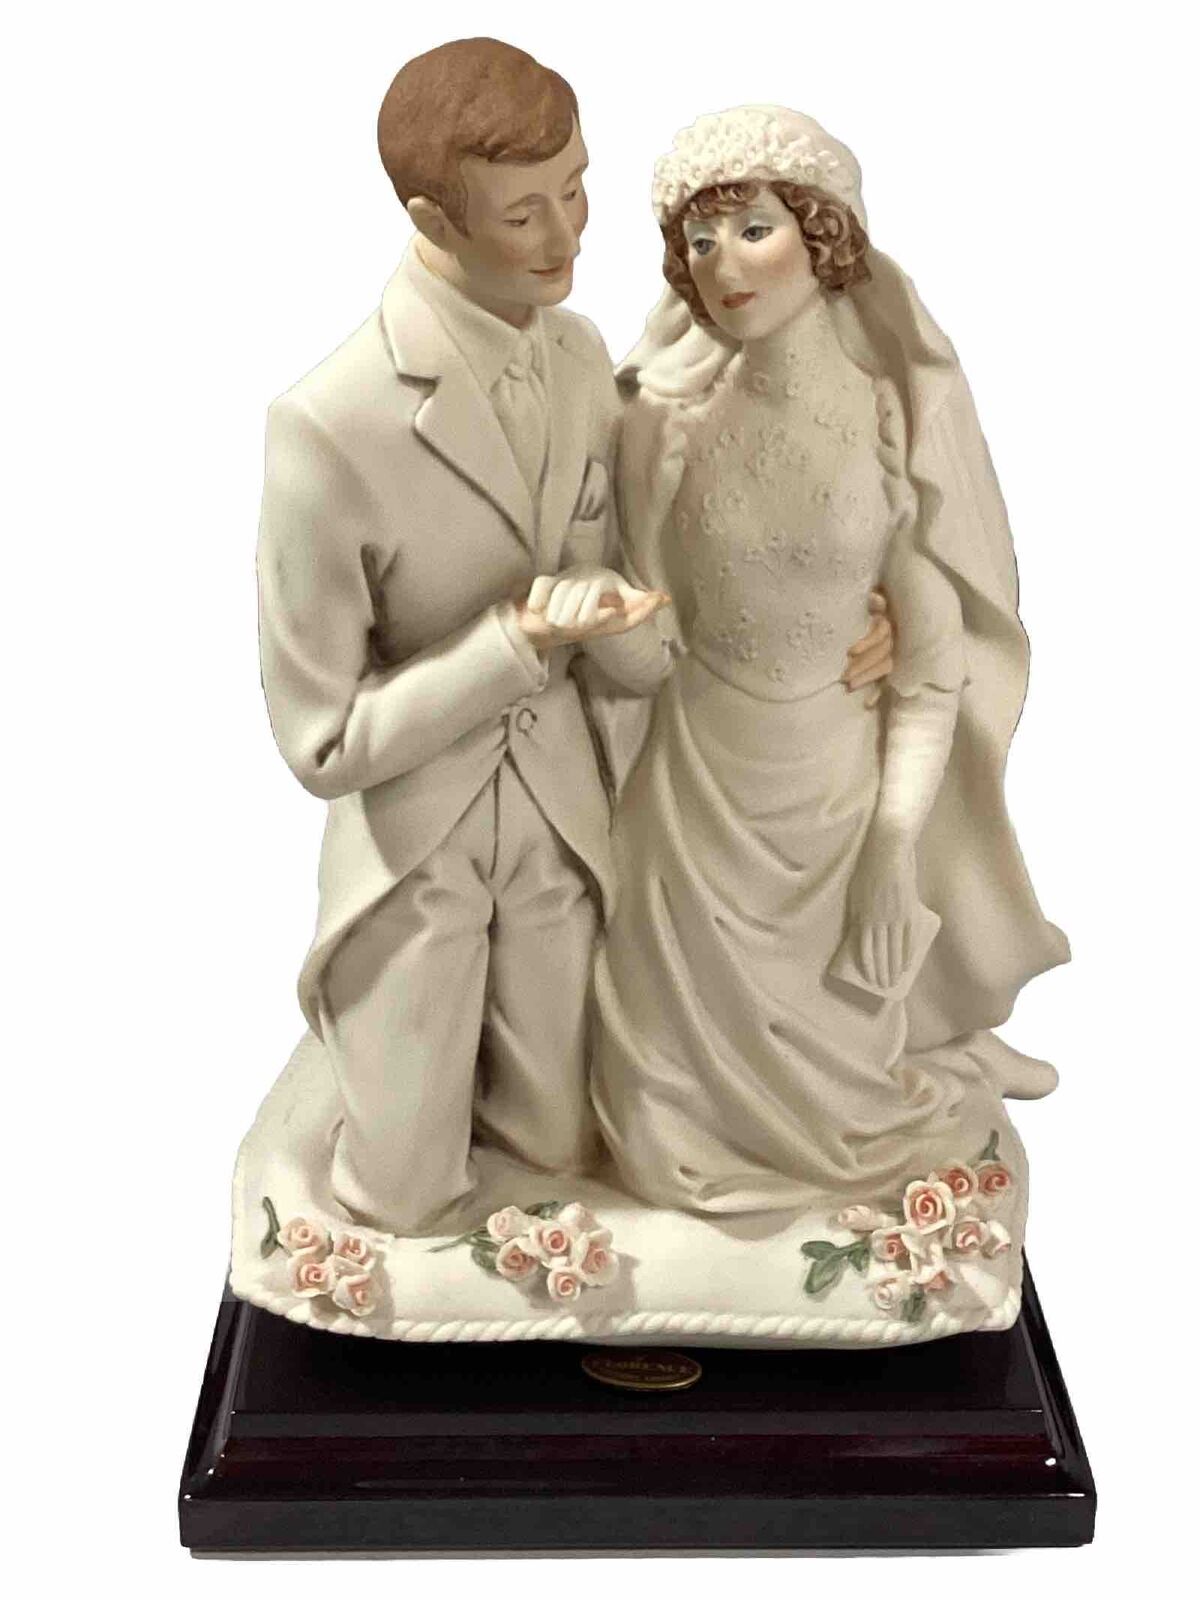 Vintage Giuseppe Armani Figurine Wedding Vows Sculpture With Box Item # 1577F